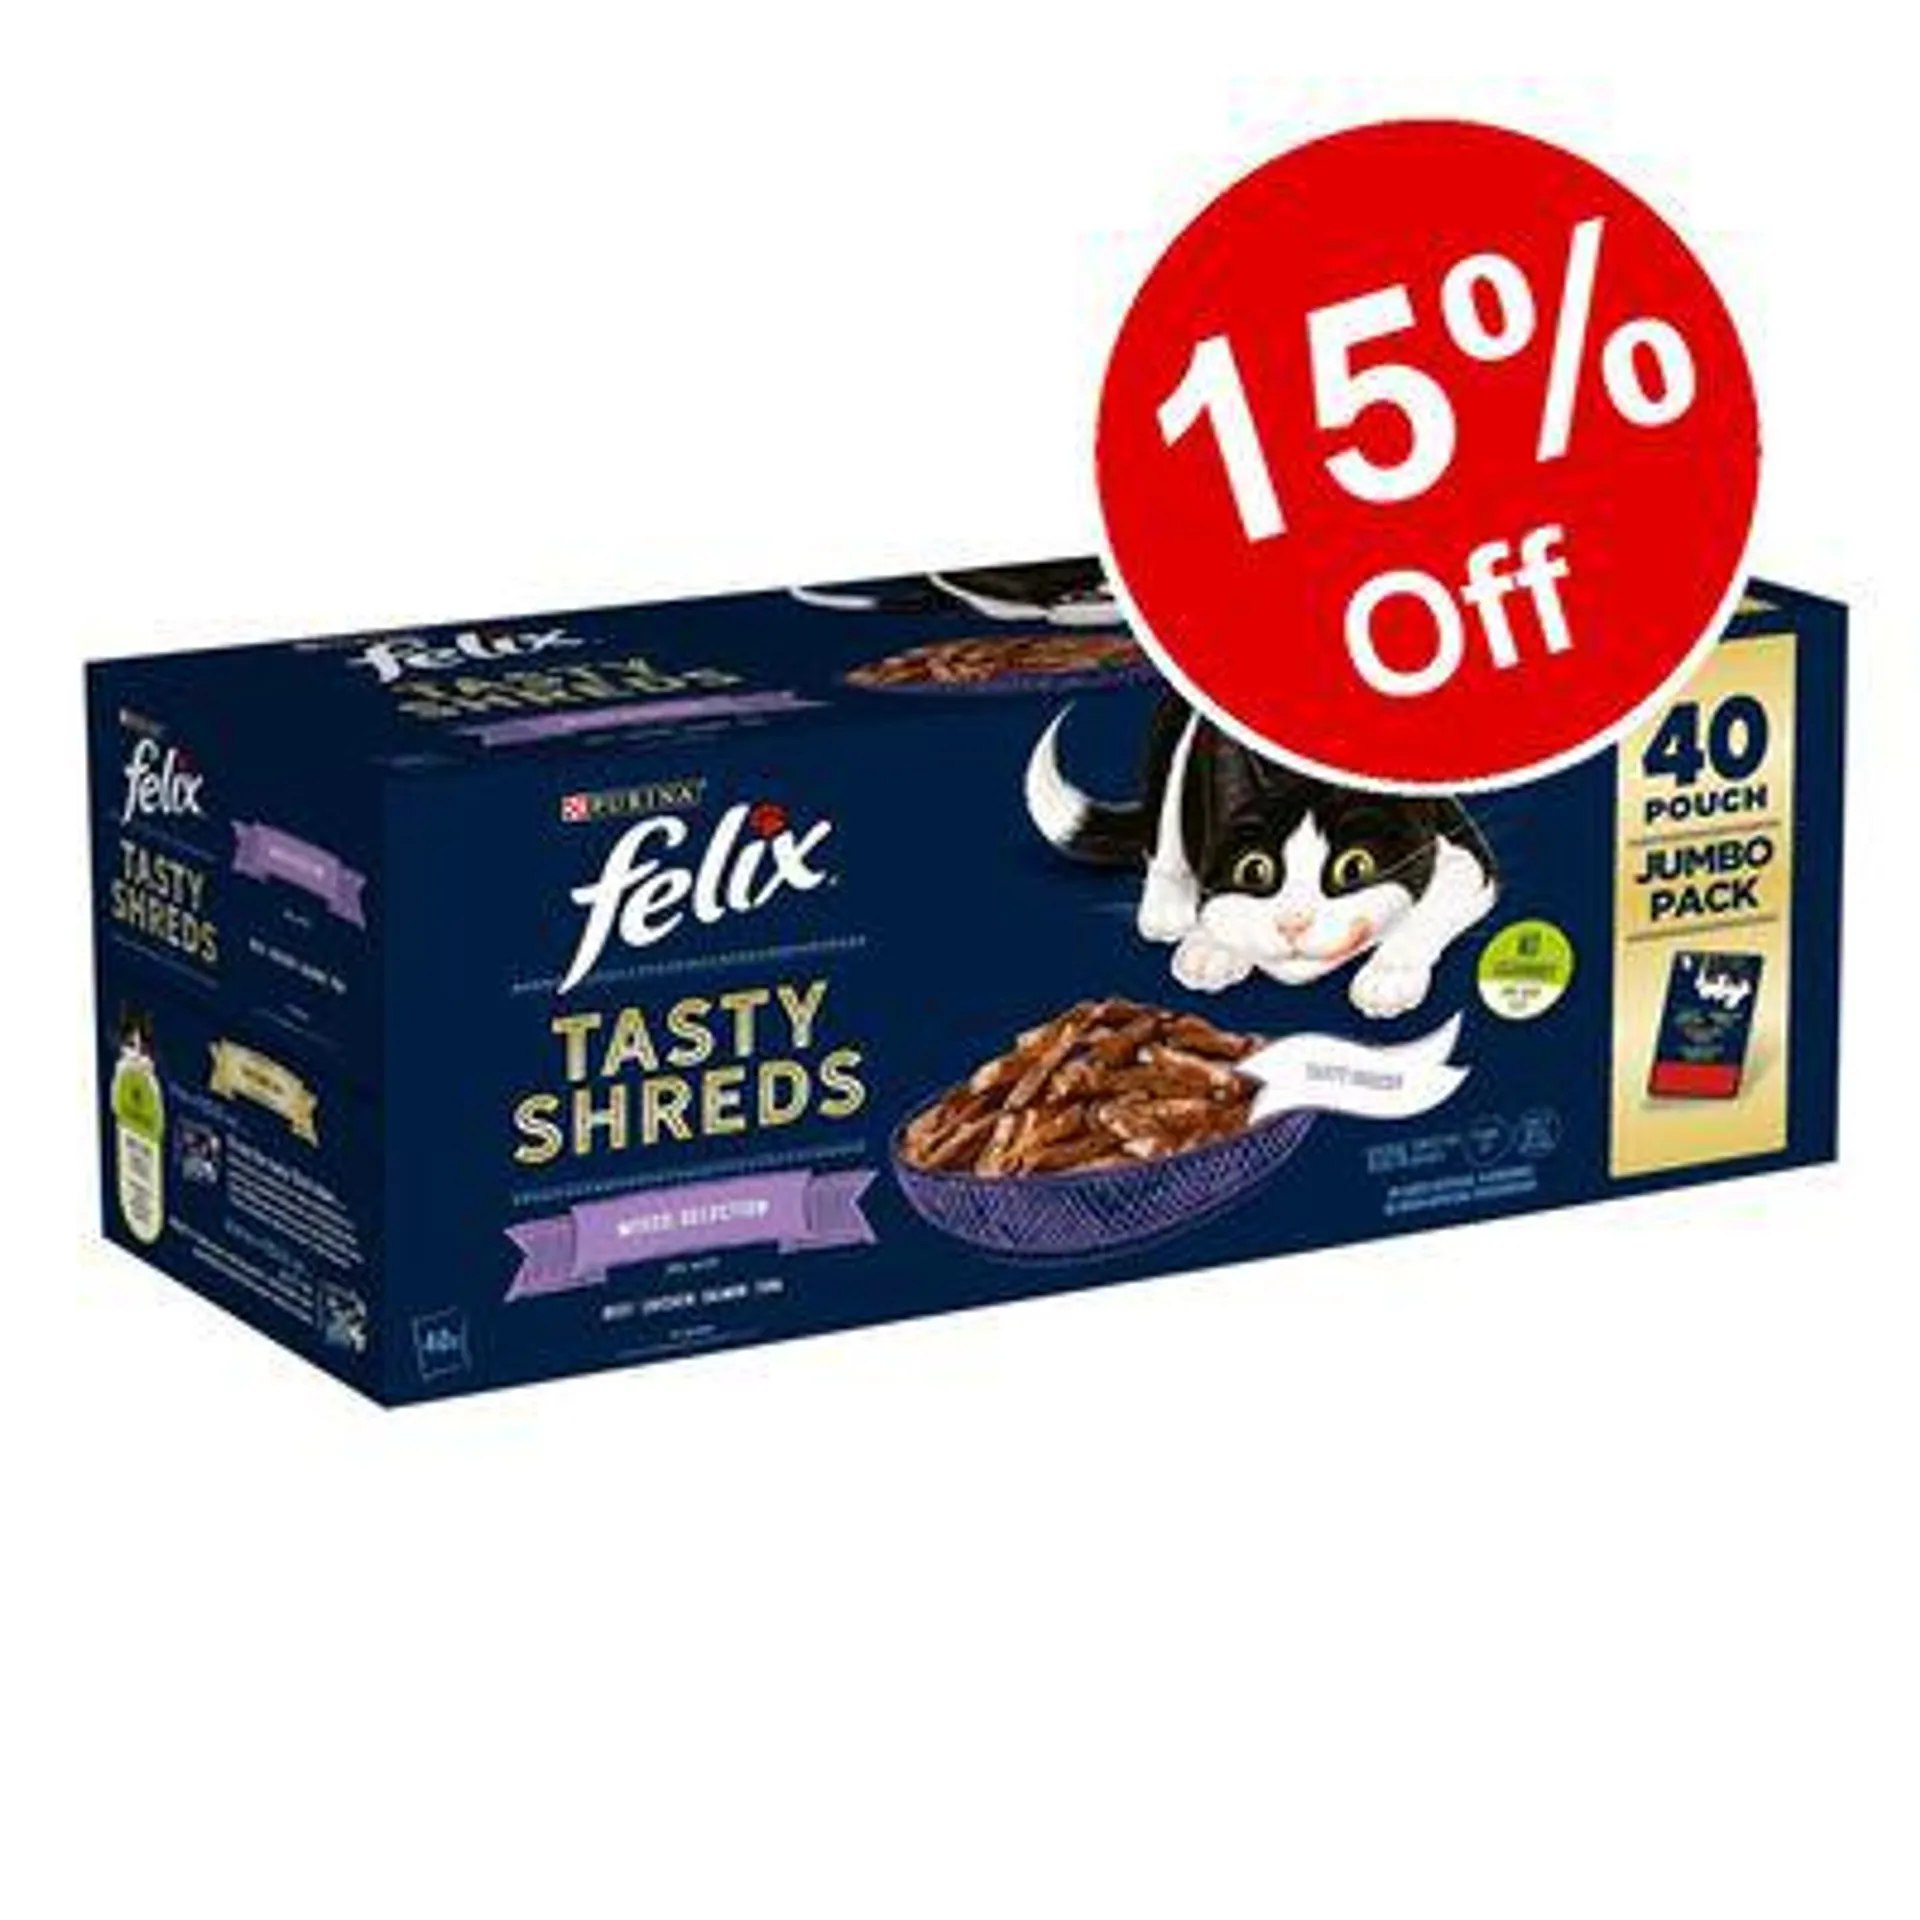 40 x 80g Felix Tasty Shreds Wet Cat Food - 15% Off! *